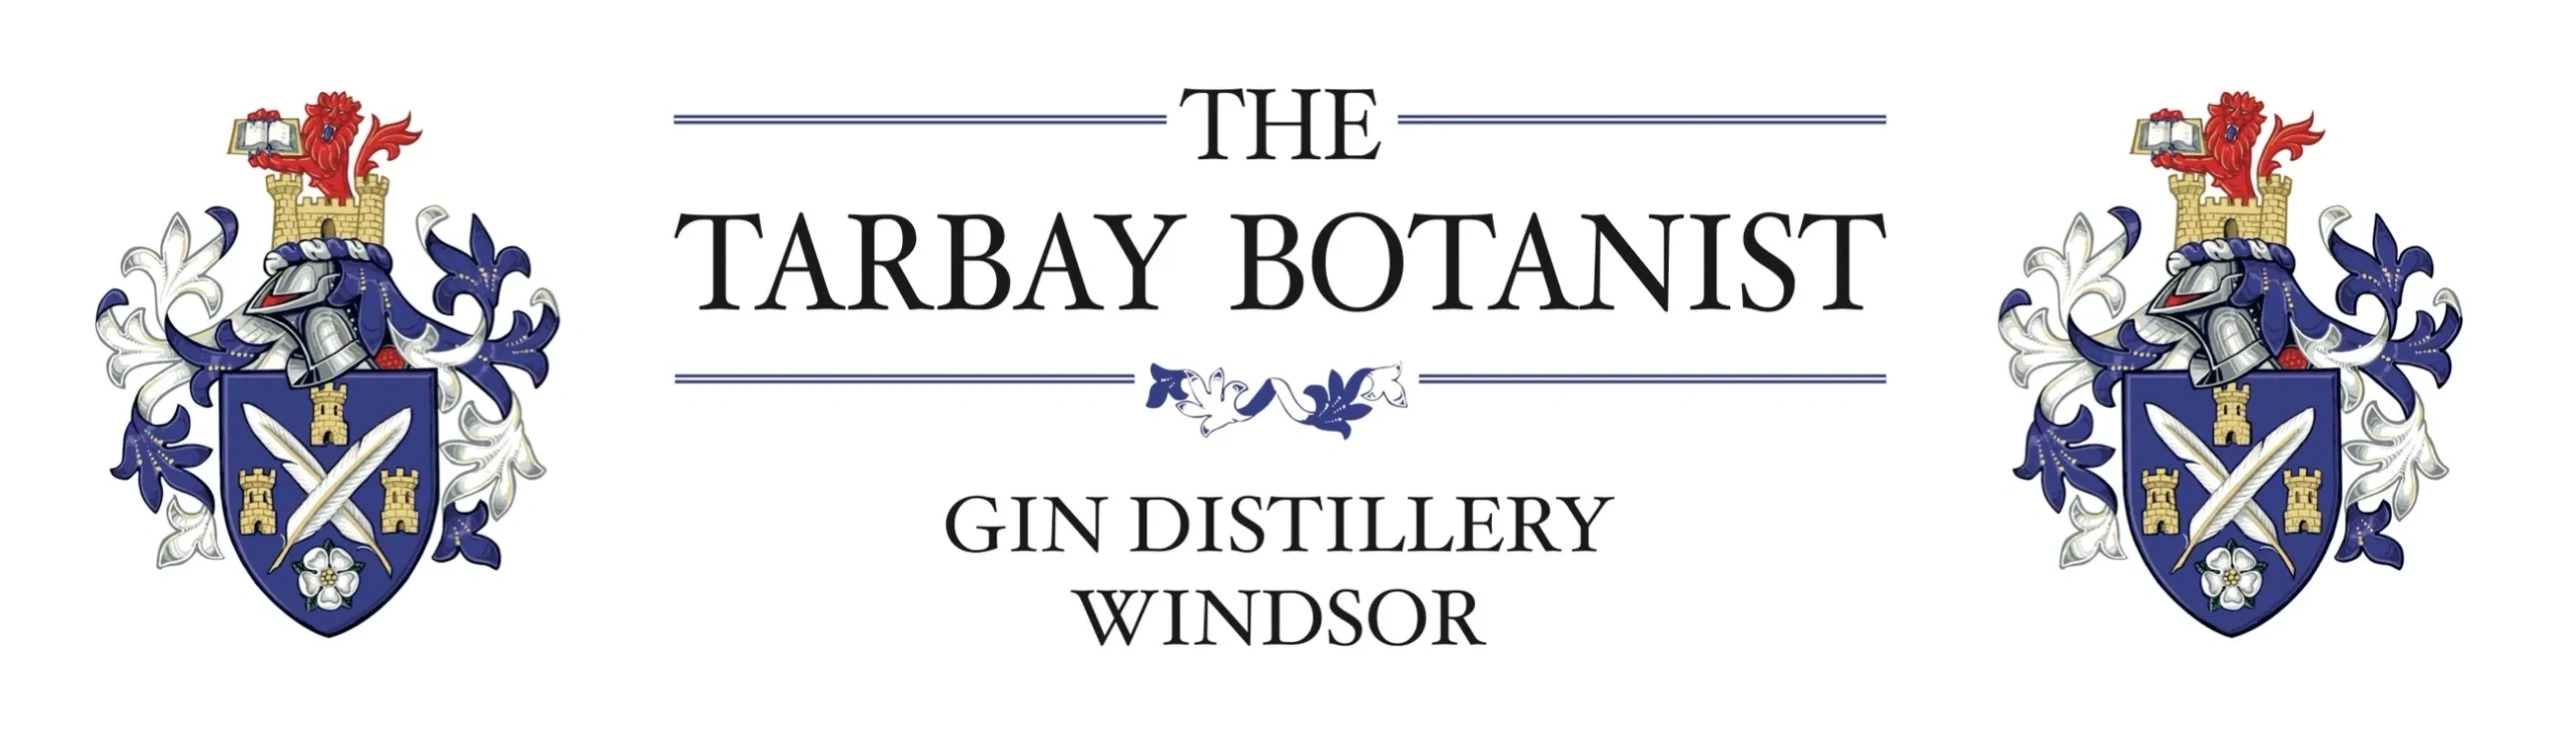 Windsor Gin - The Tarbay botanist